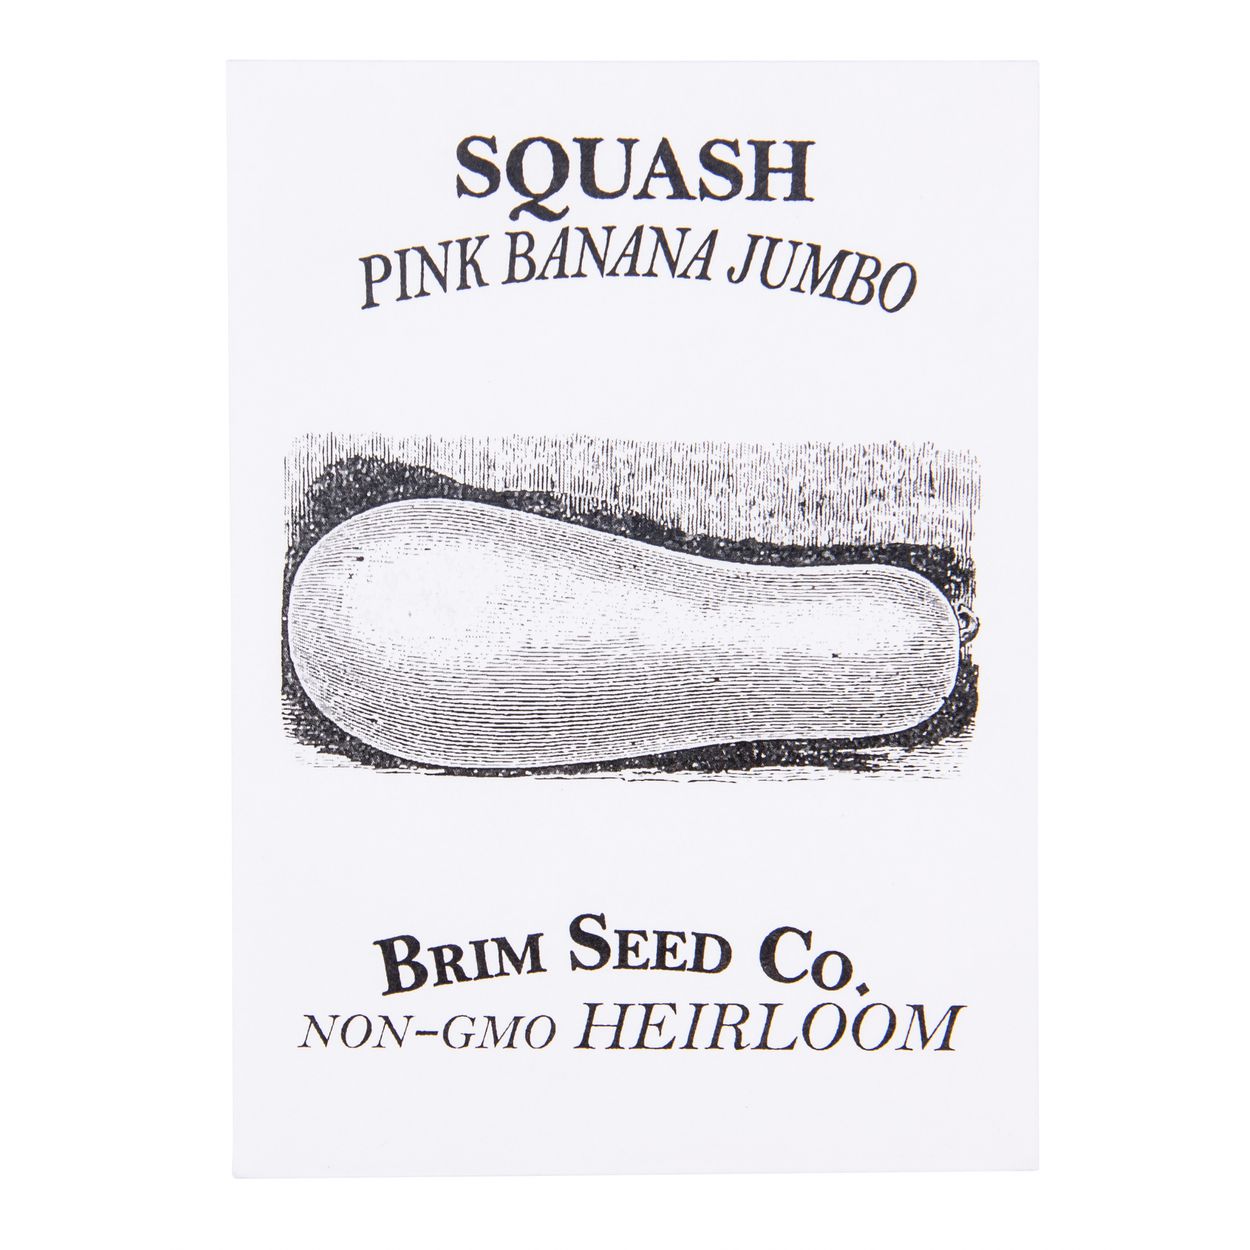 Brim Seed Co. - Pink Banana Jumbo Squash Heirloom Seed